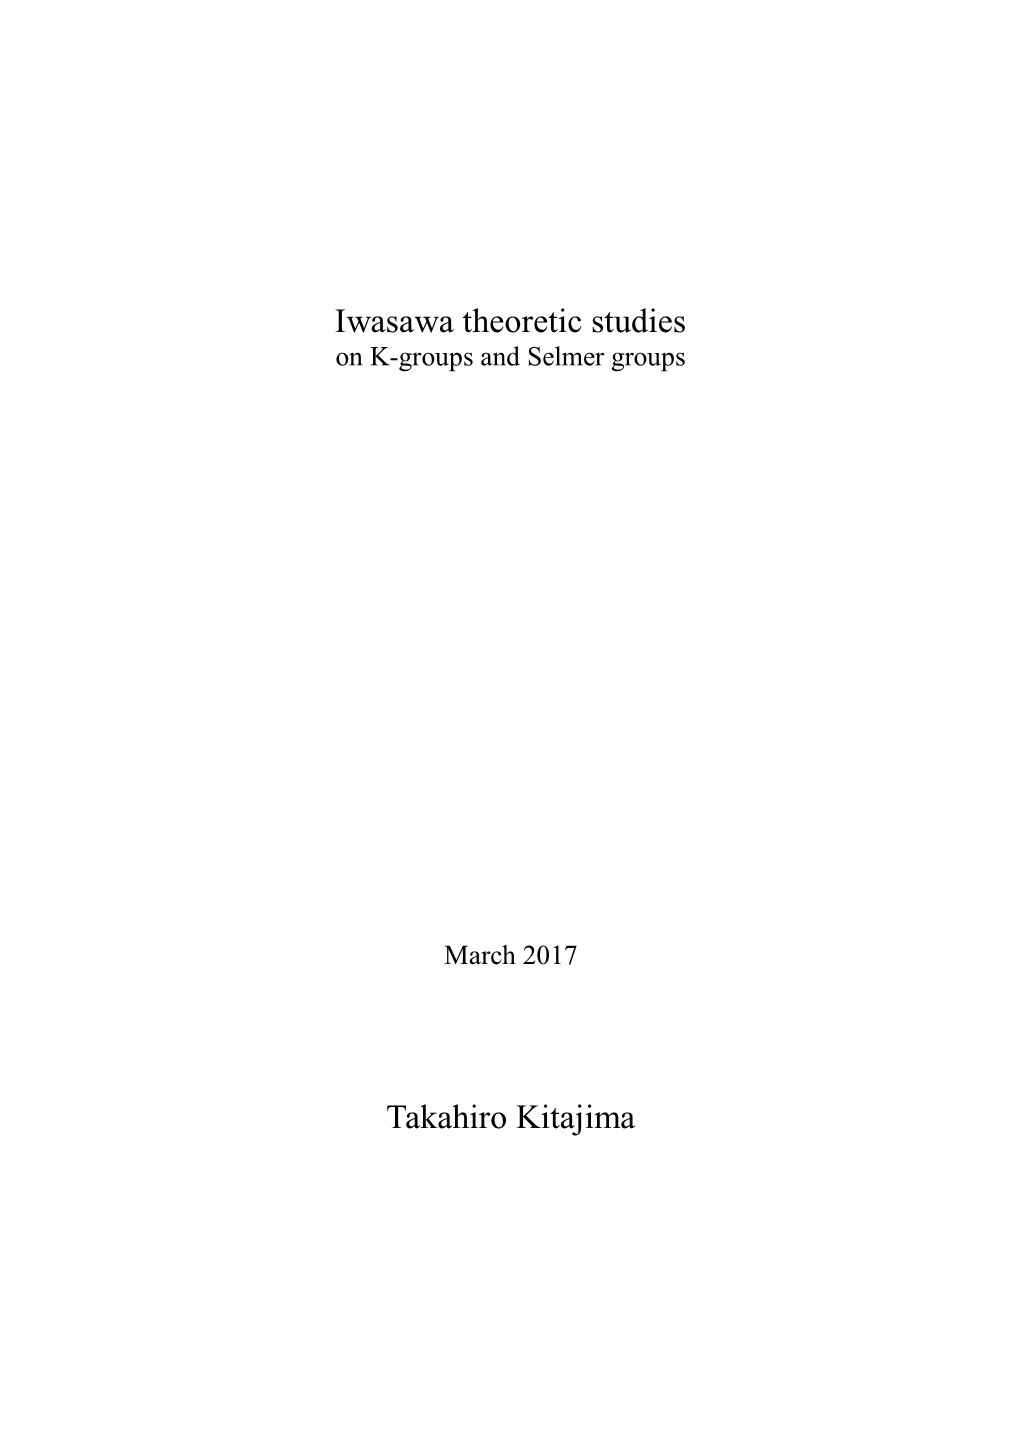 Iwasawa Theoretic Studies on K-Groups and Selmer Groups(本文)